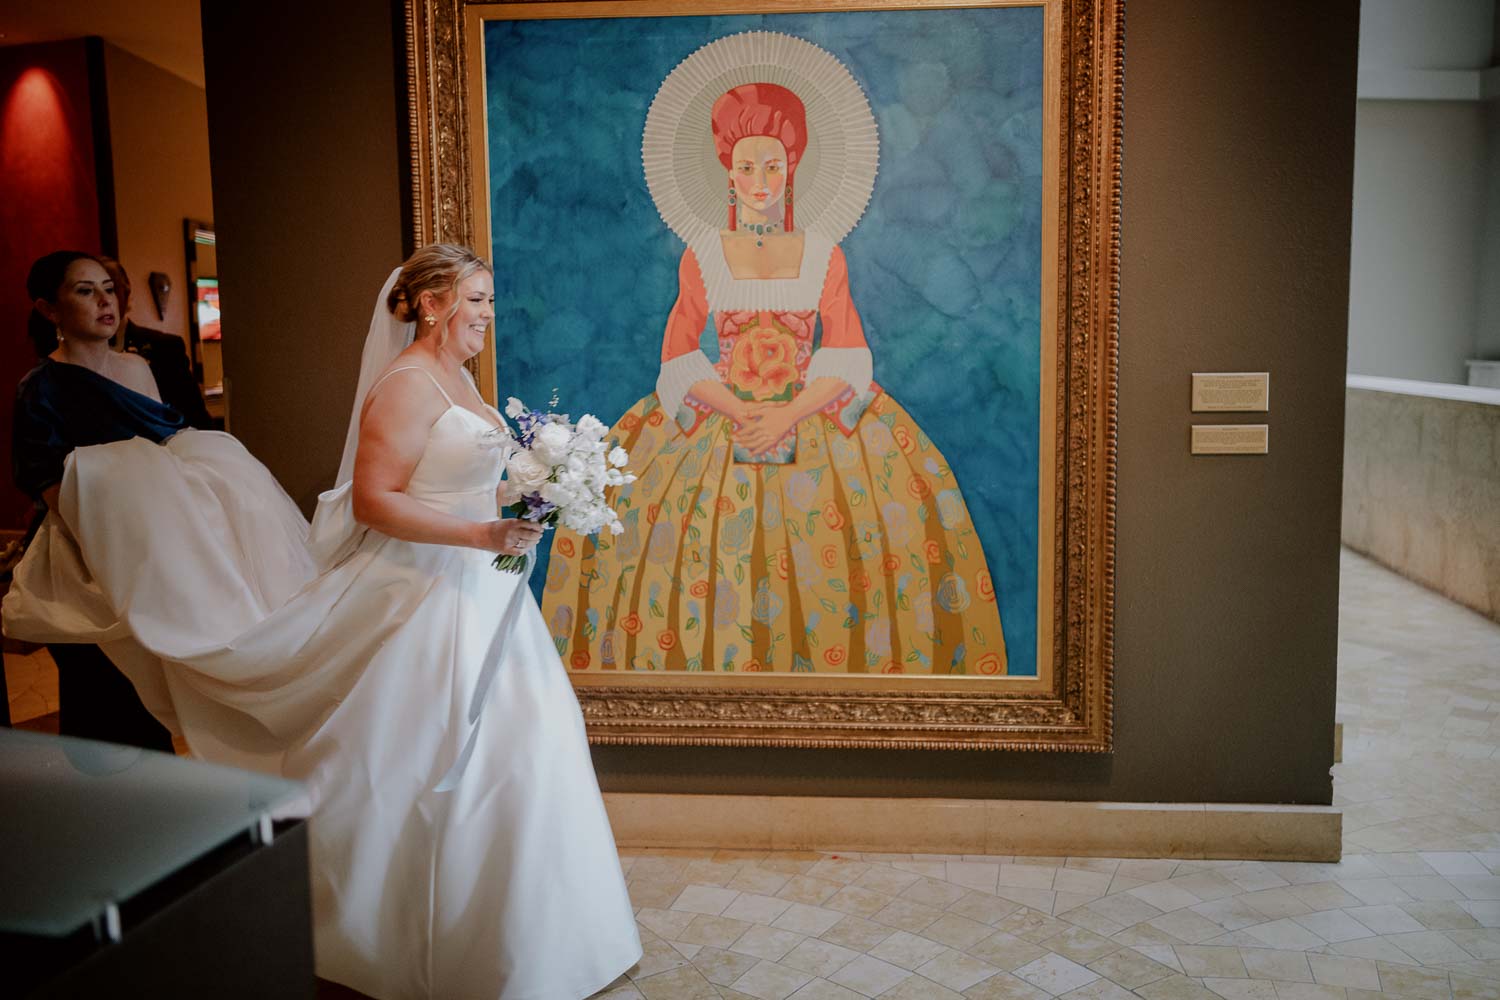 A bride passes a painting in the Hotel Contessa, San Antonio, Texas